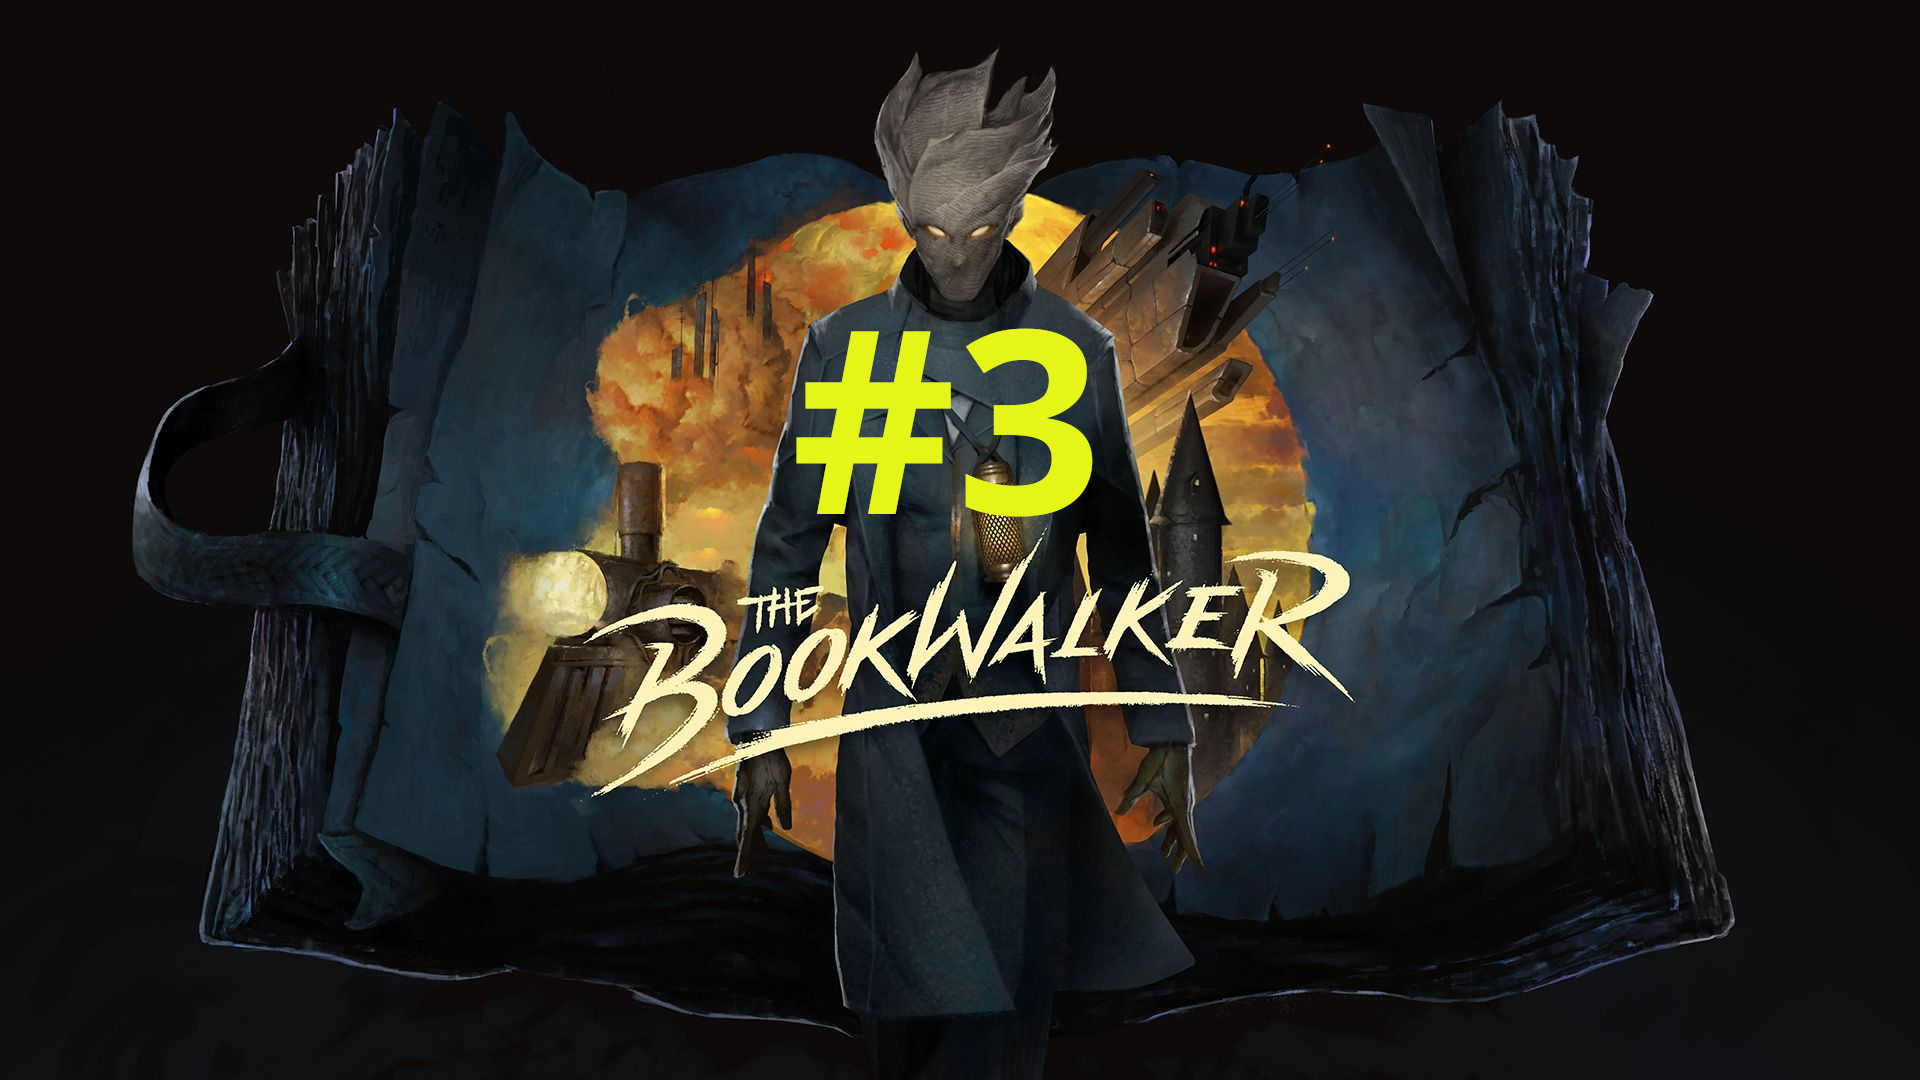 The Bookwalker: Thief of Tales (Demo) | Выполнил первое задание | Прохождение #3